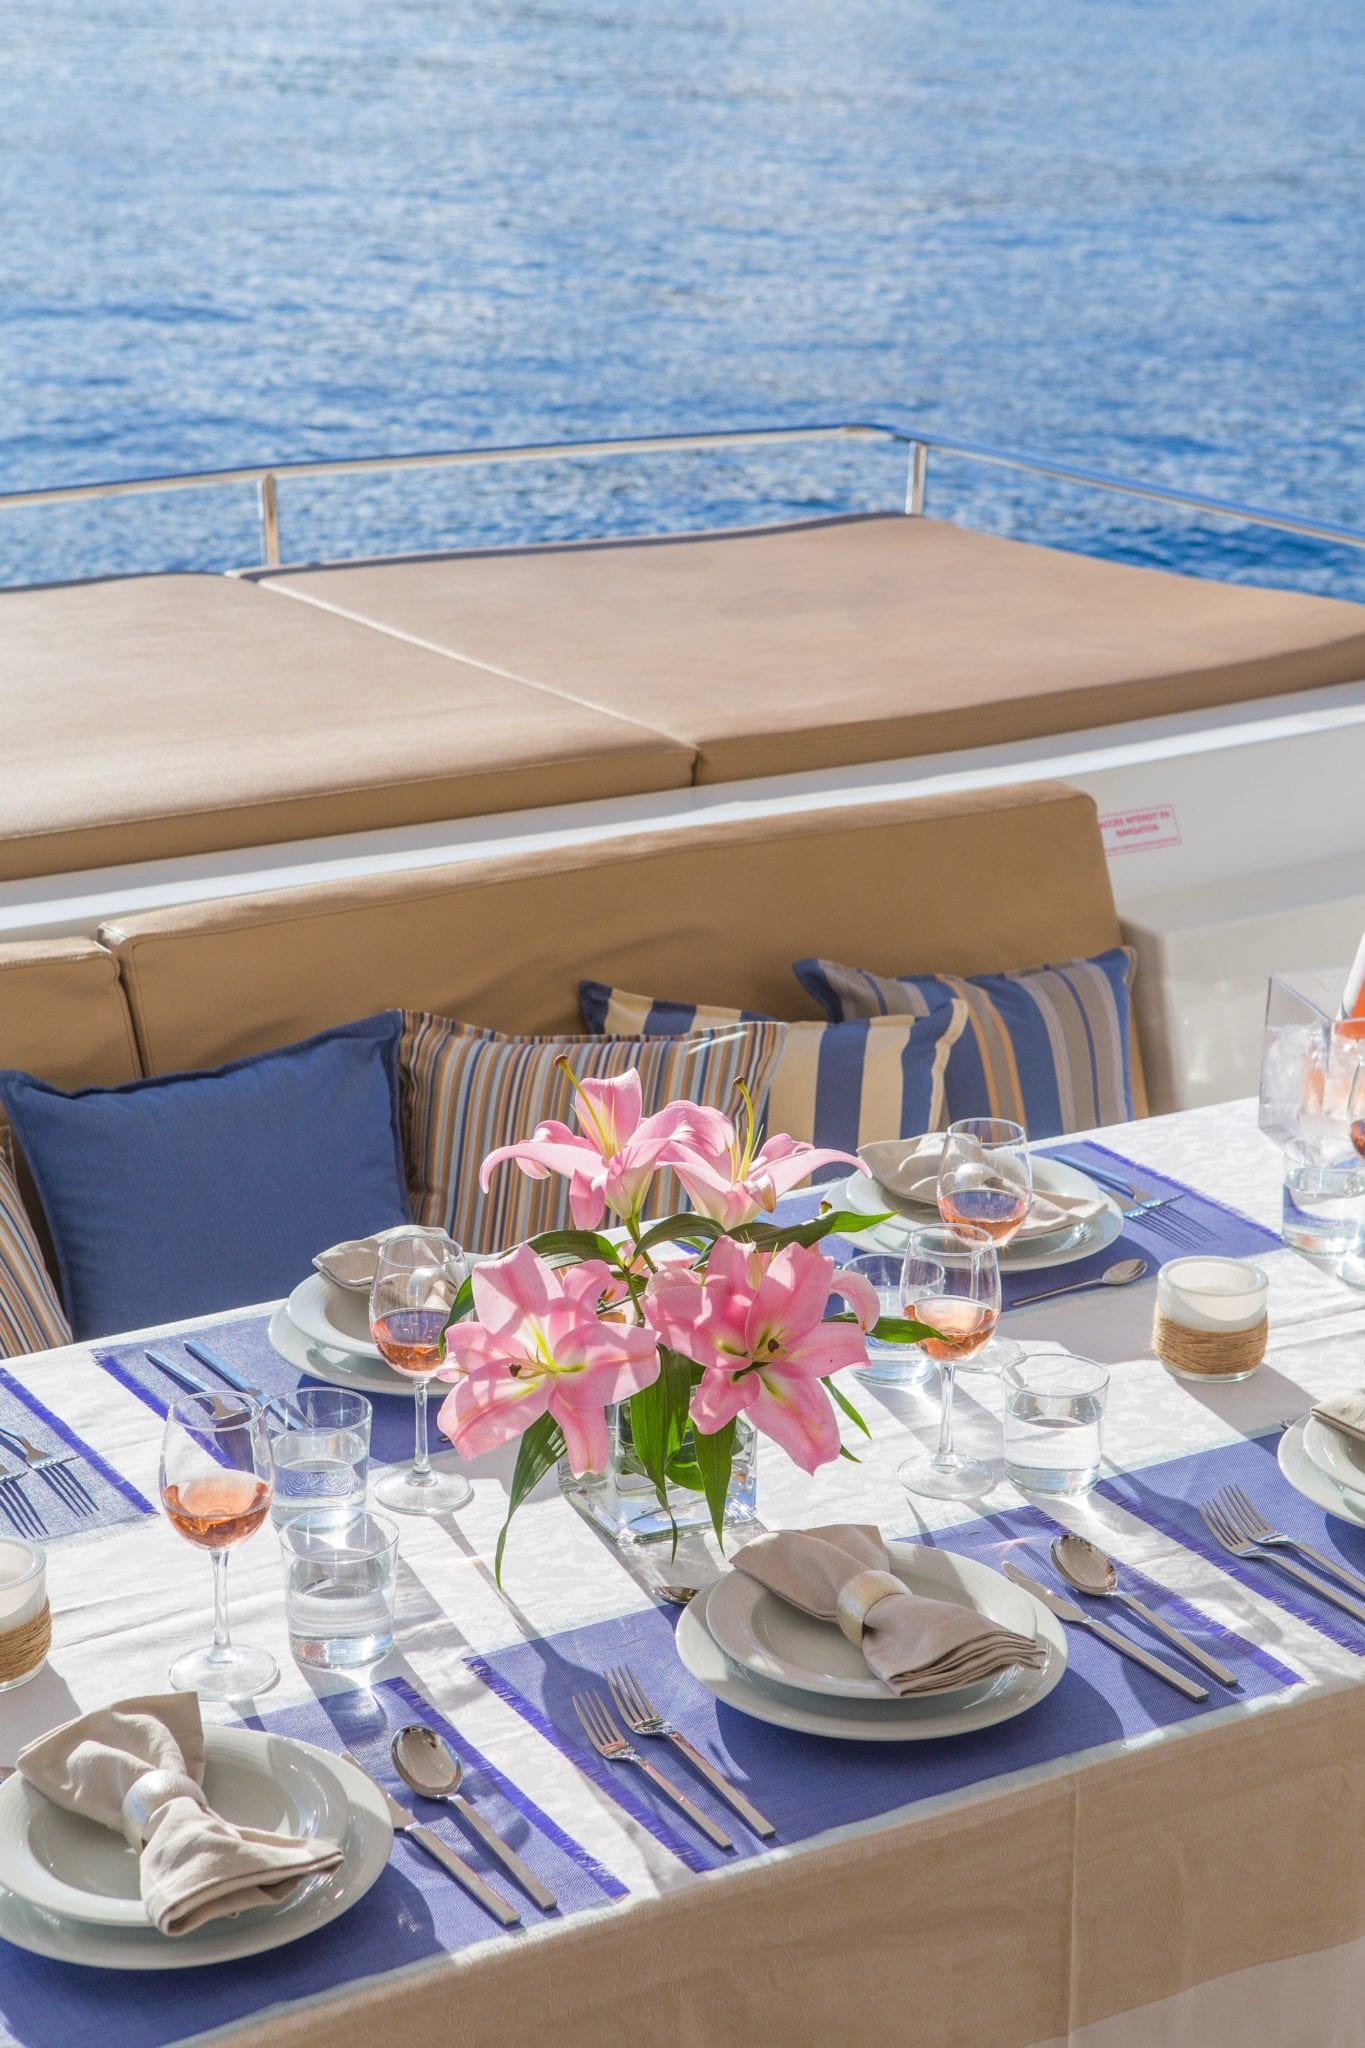 highjinks ii catamaran aft dining (2) min -  Valef Yachts Chartering - 2387